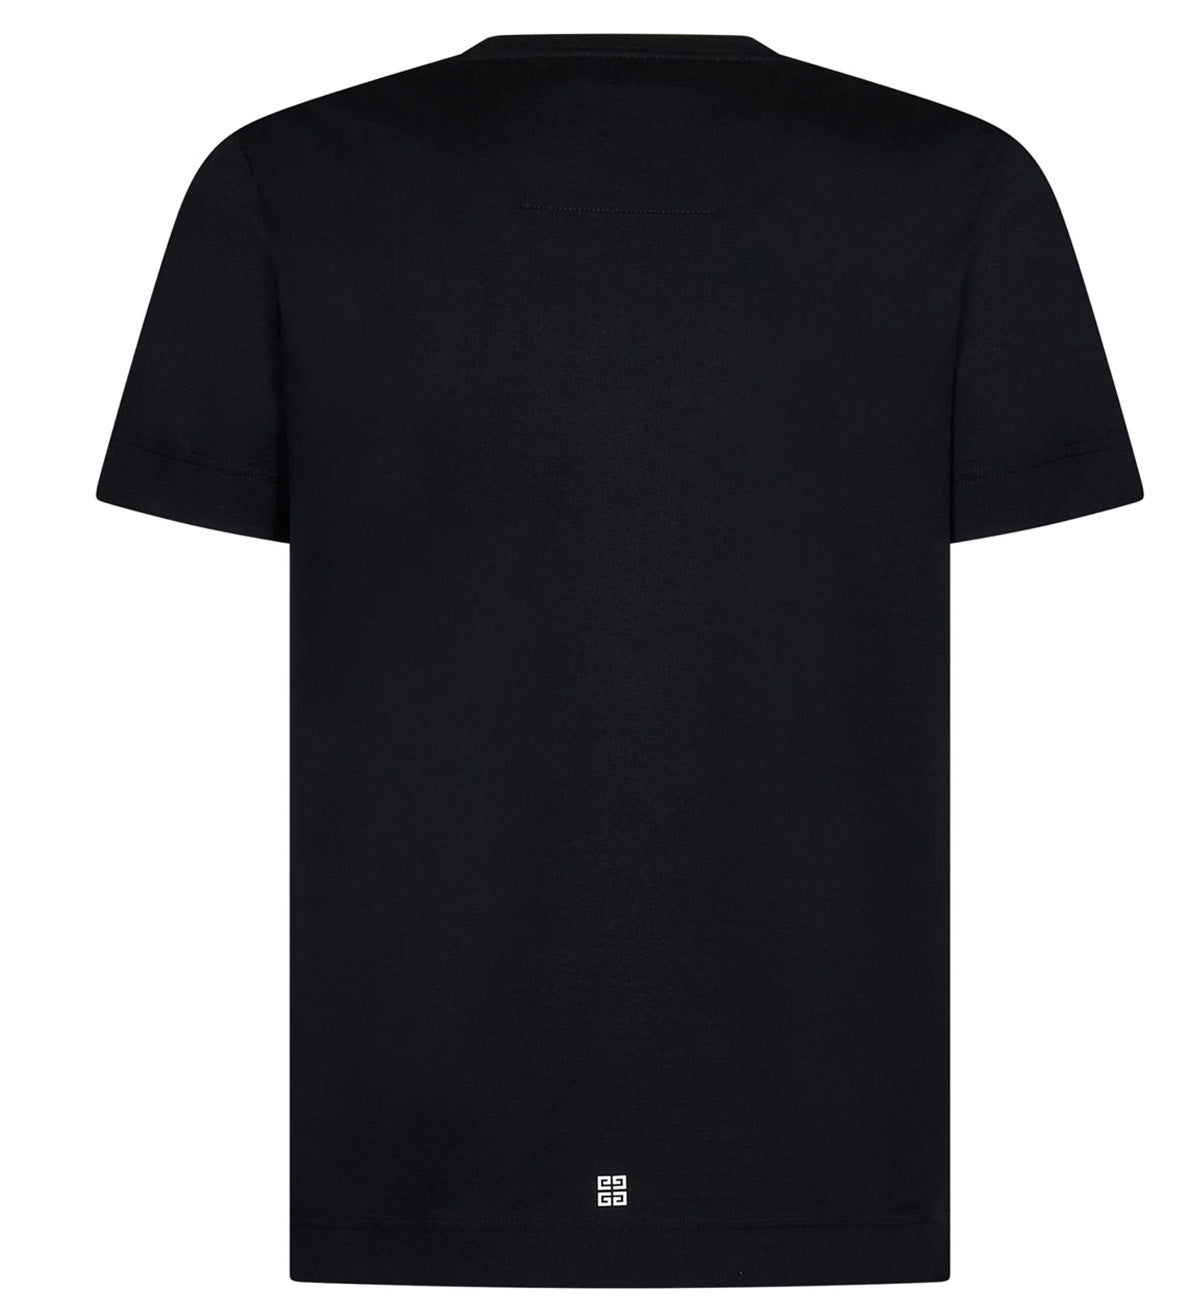 Givenchy 4G Star Printed T-Shirt (Black)